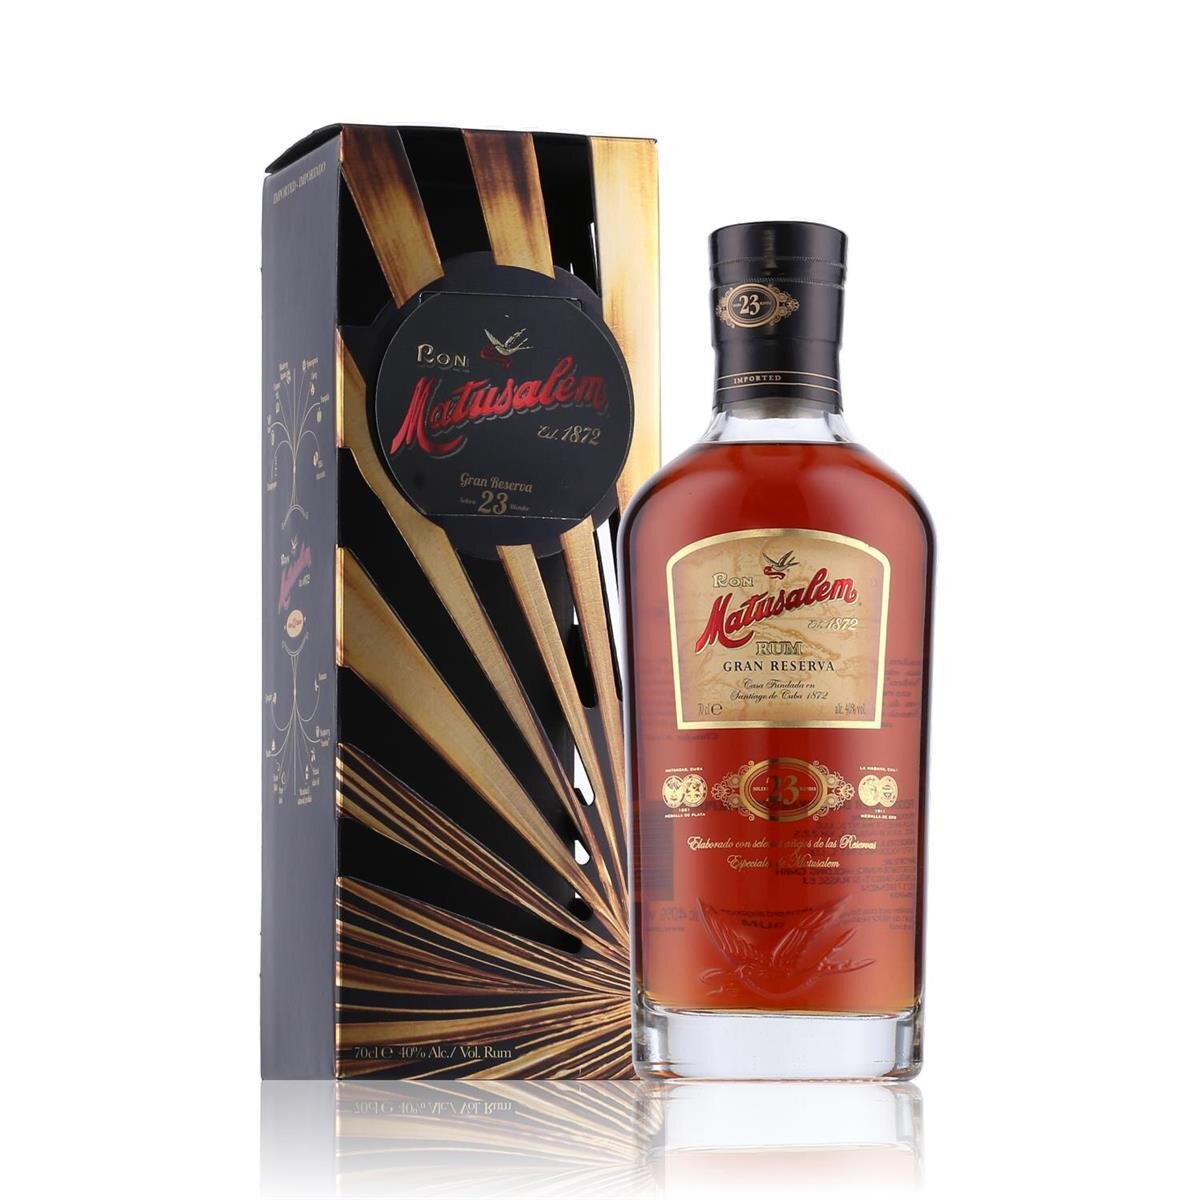 Metusalem Solera Rum Reserva 40% Blender Gran 23 0,7l in Geschen Vol.